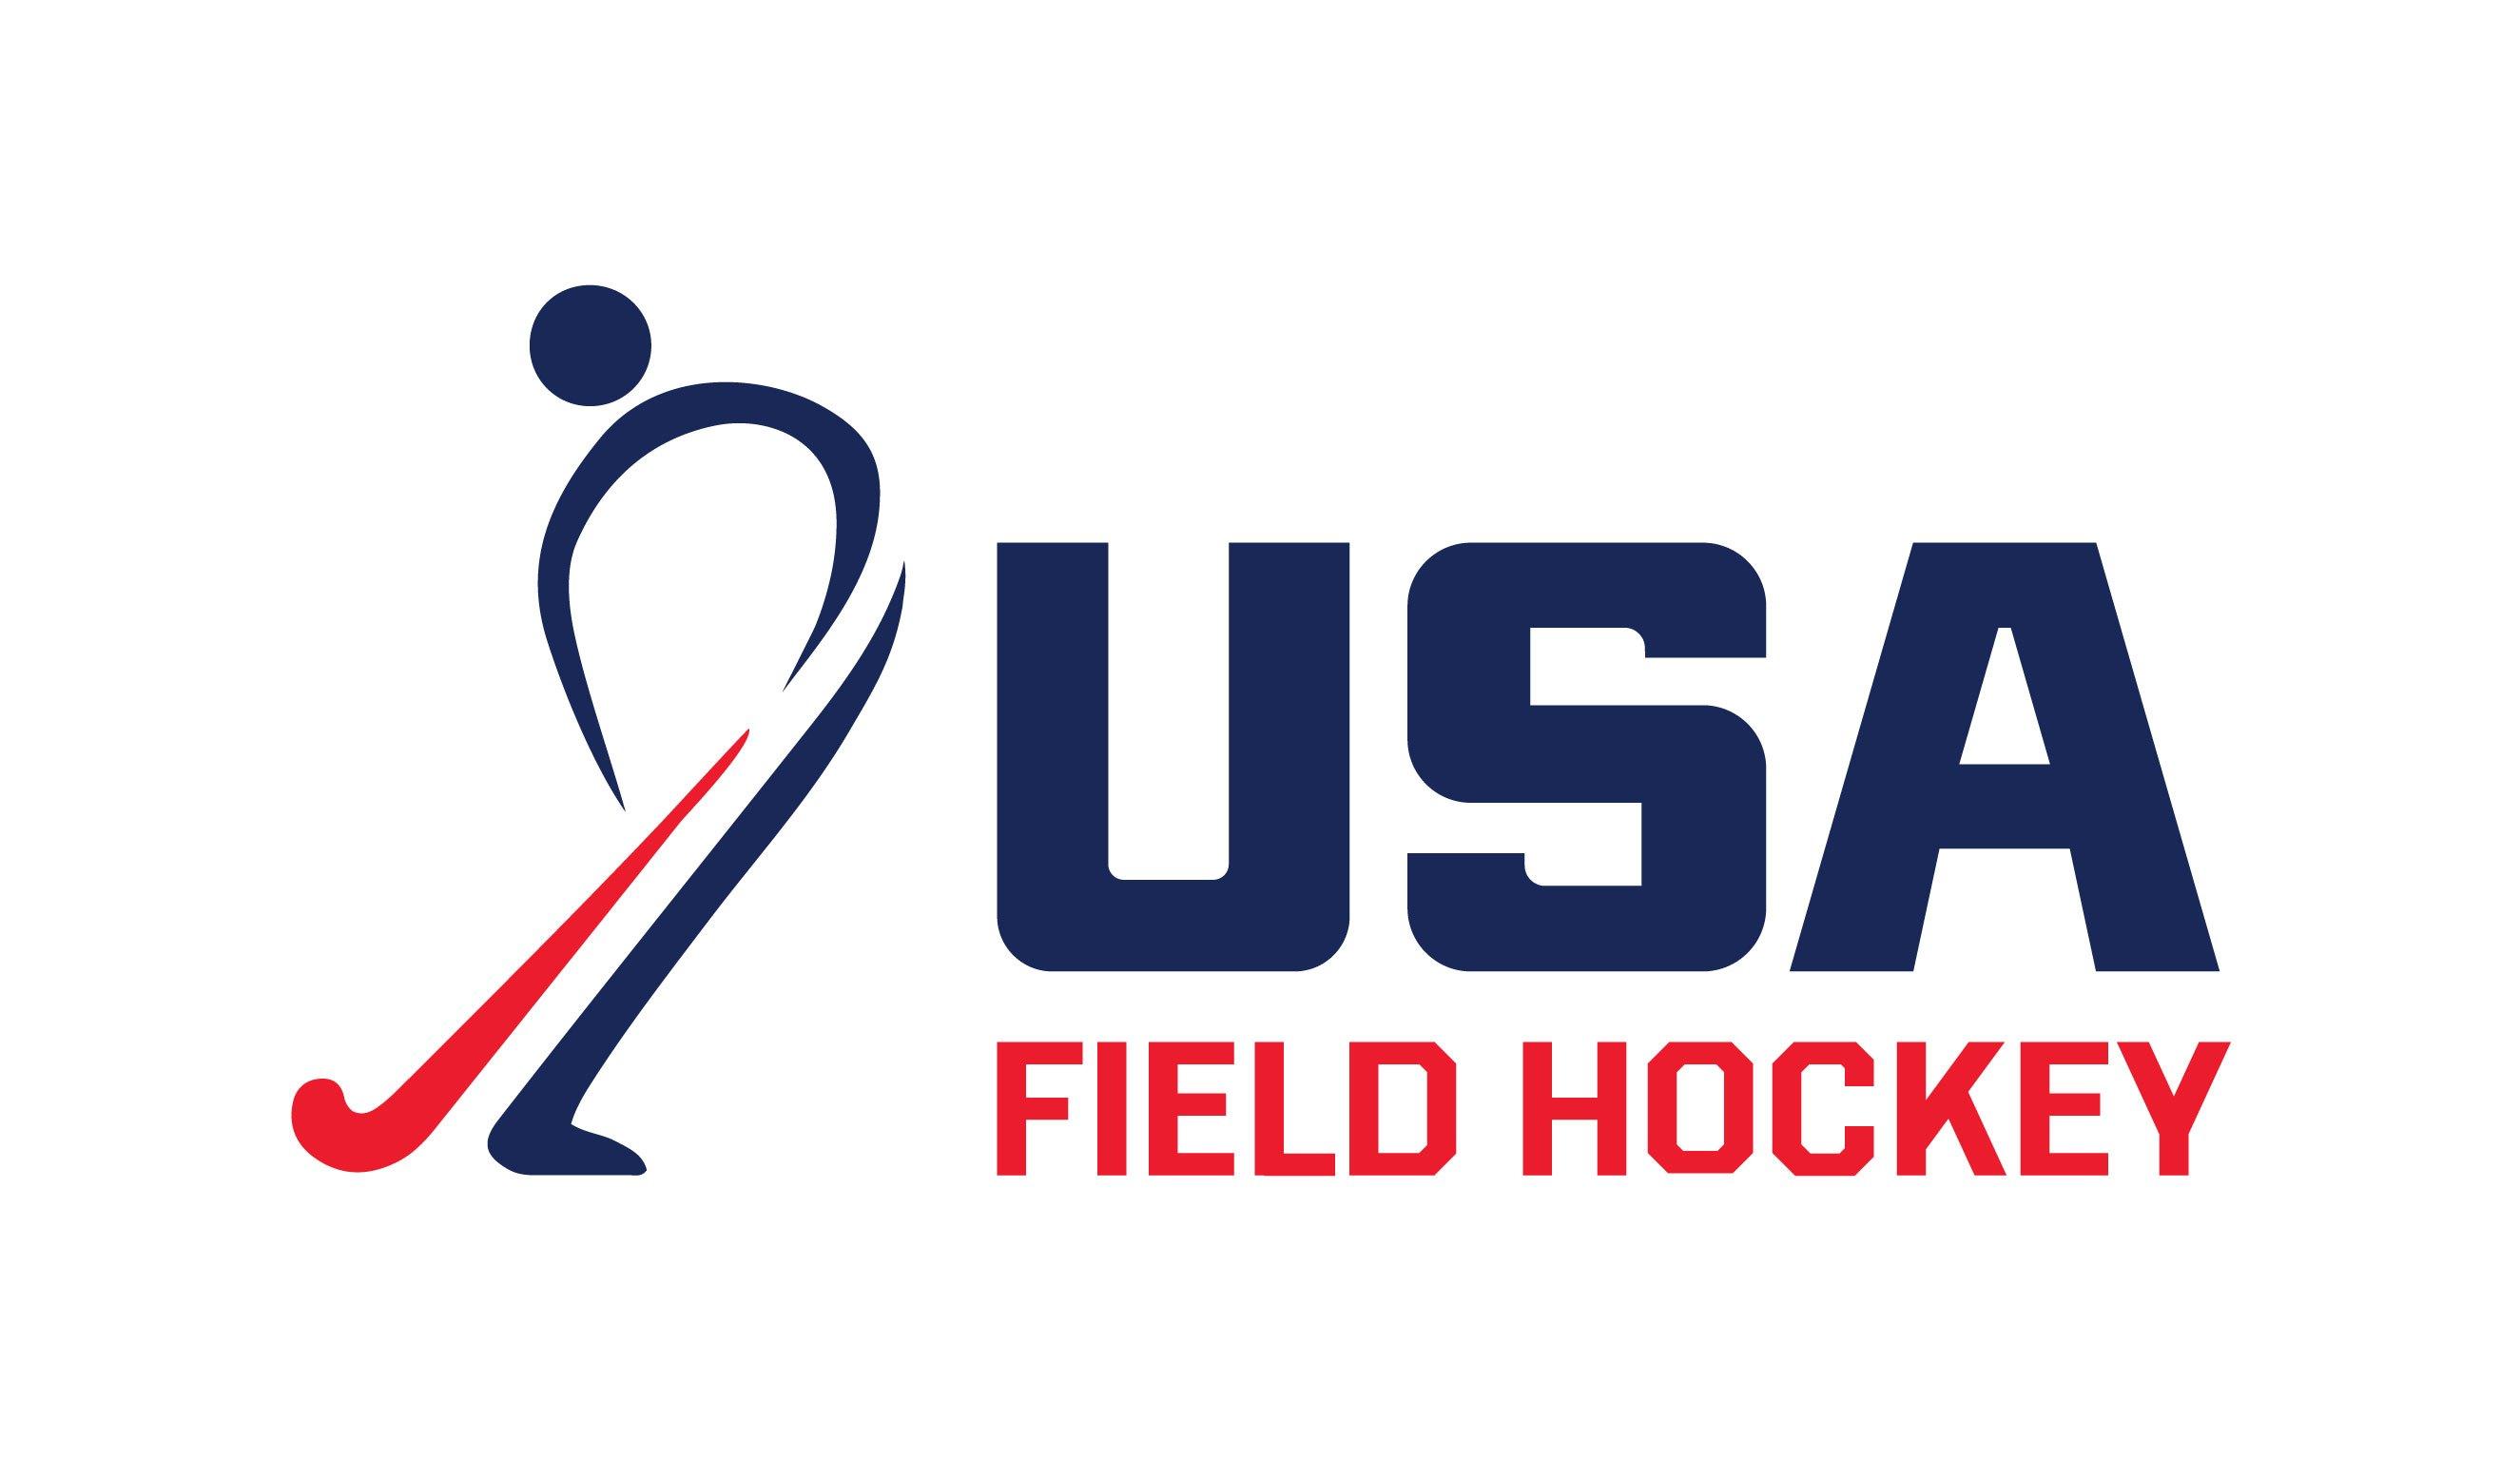 USA Field Hockey uses Firstbeat Sports